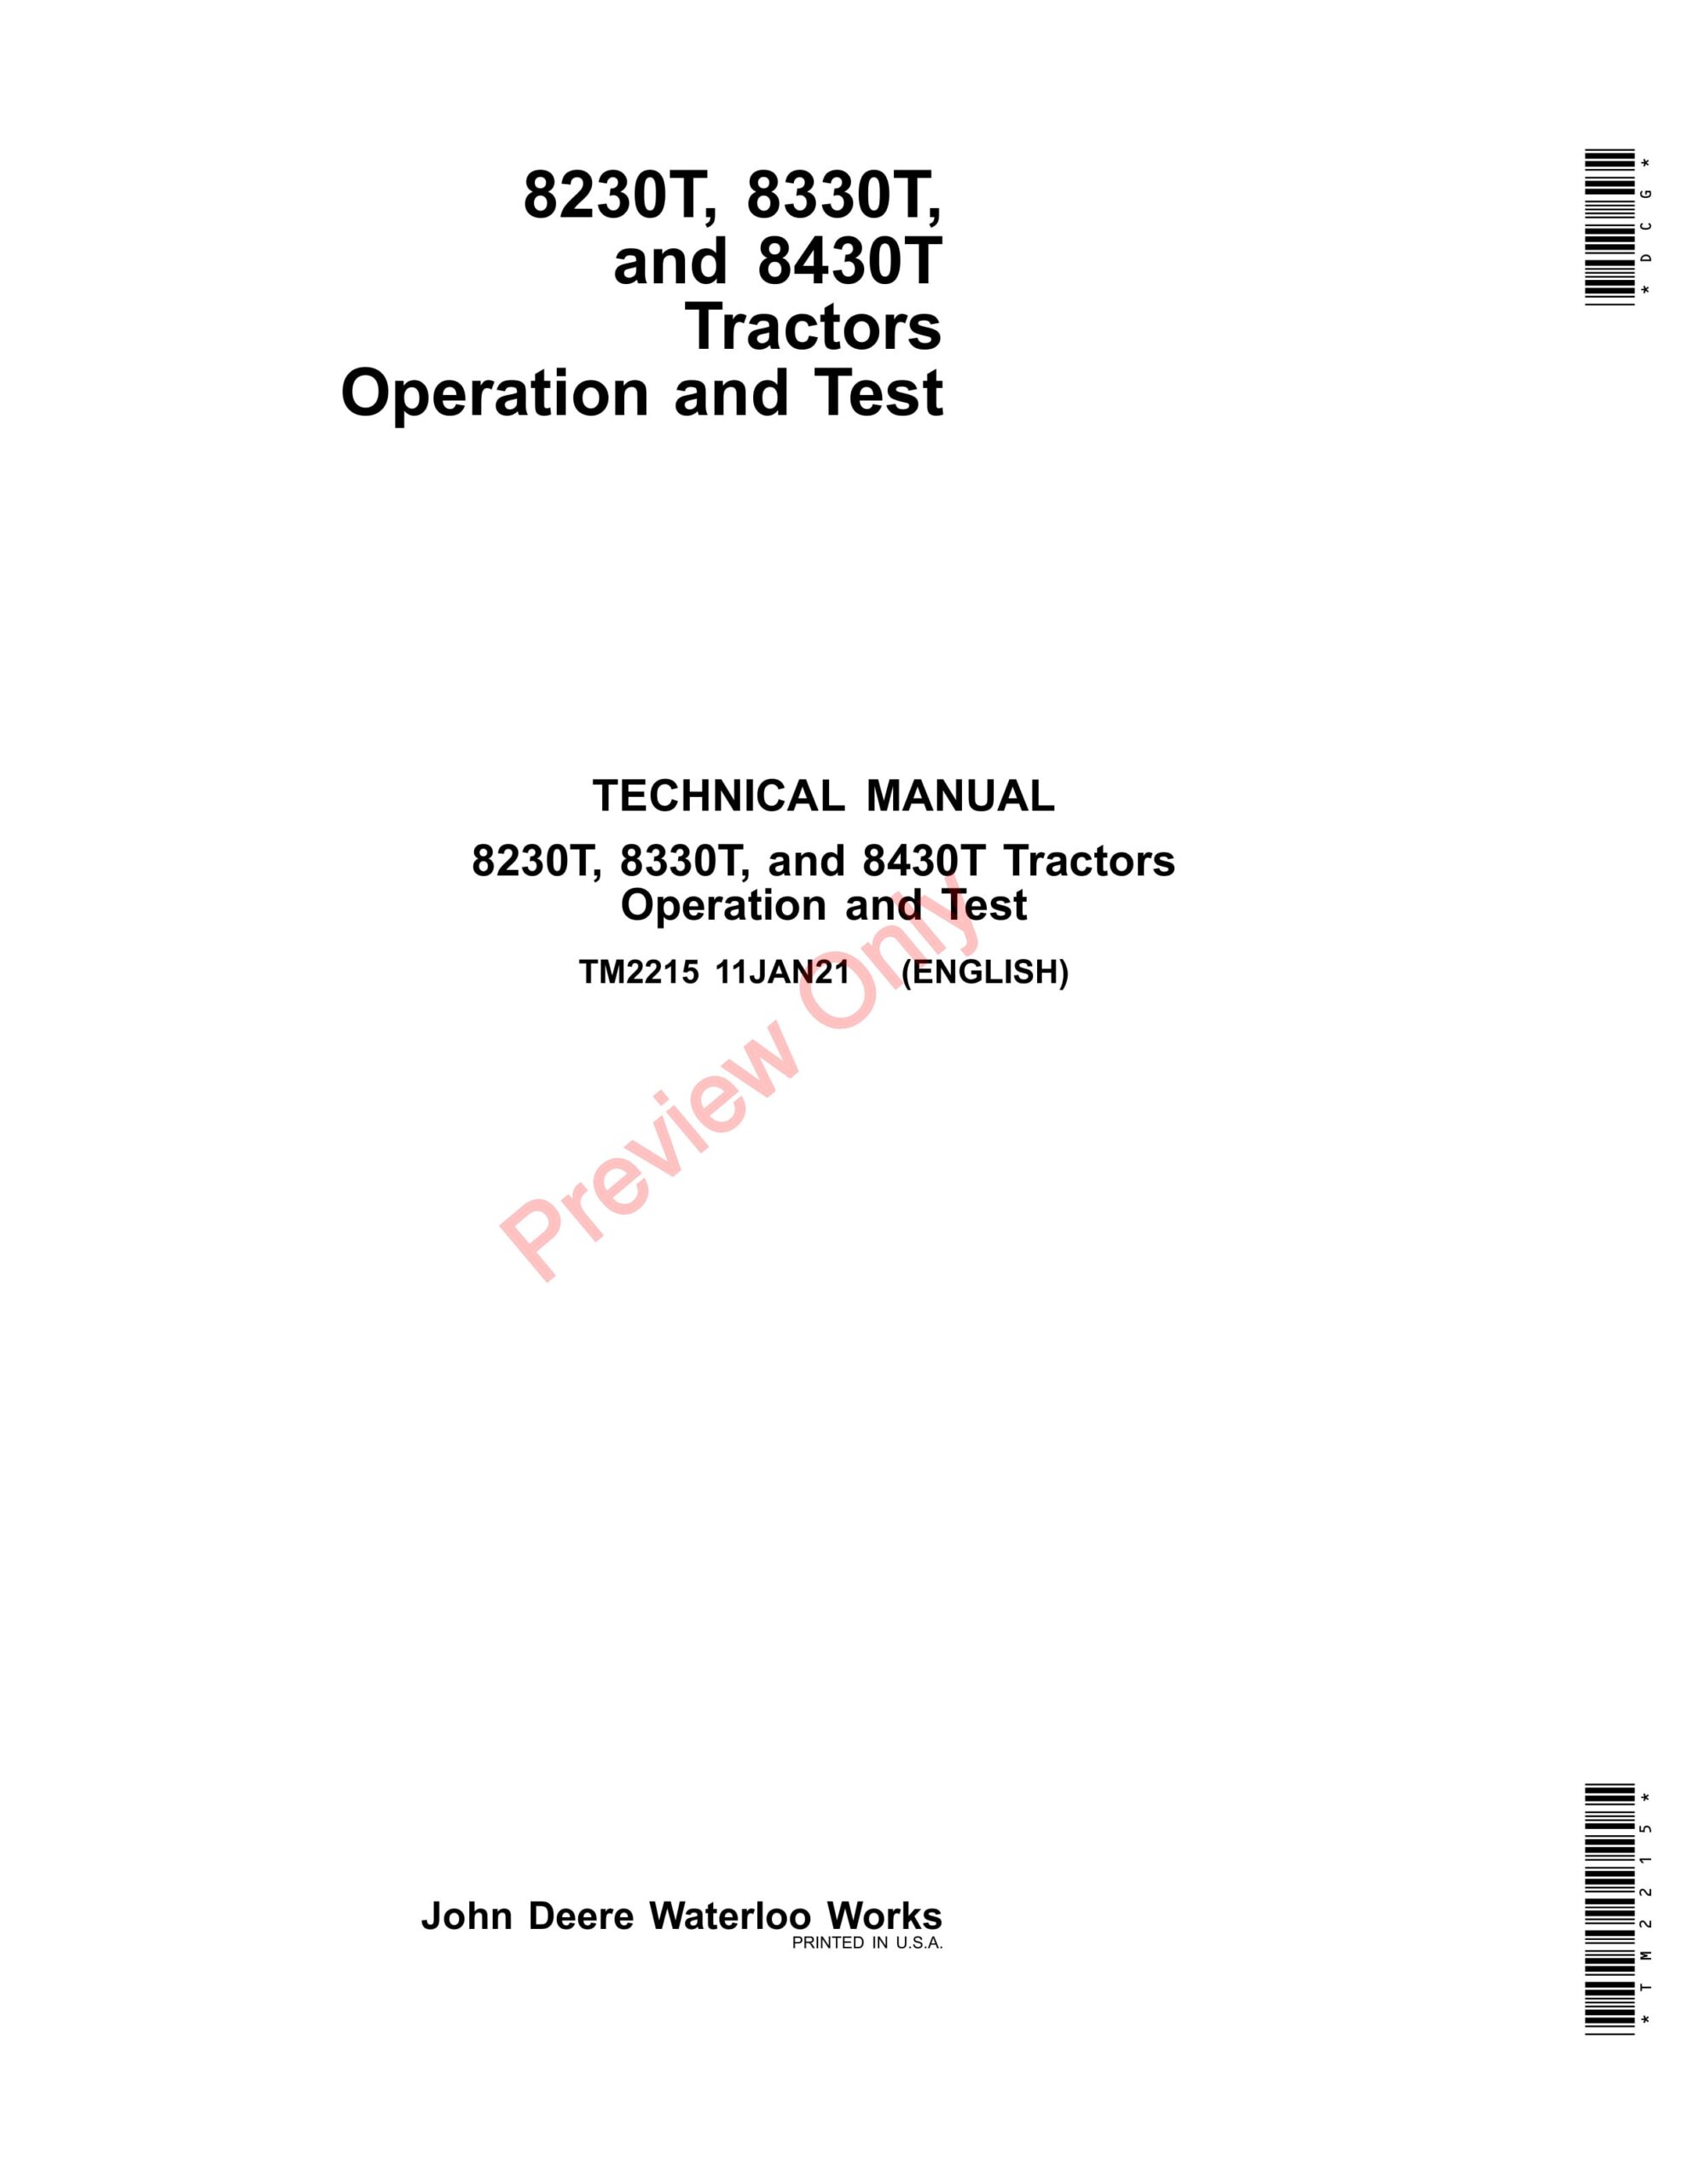 John Deere 8230T, 8330T and 8430T Tractors Technical Manual TM2215 11JAN21-1